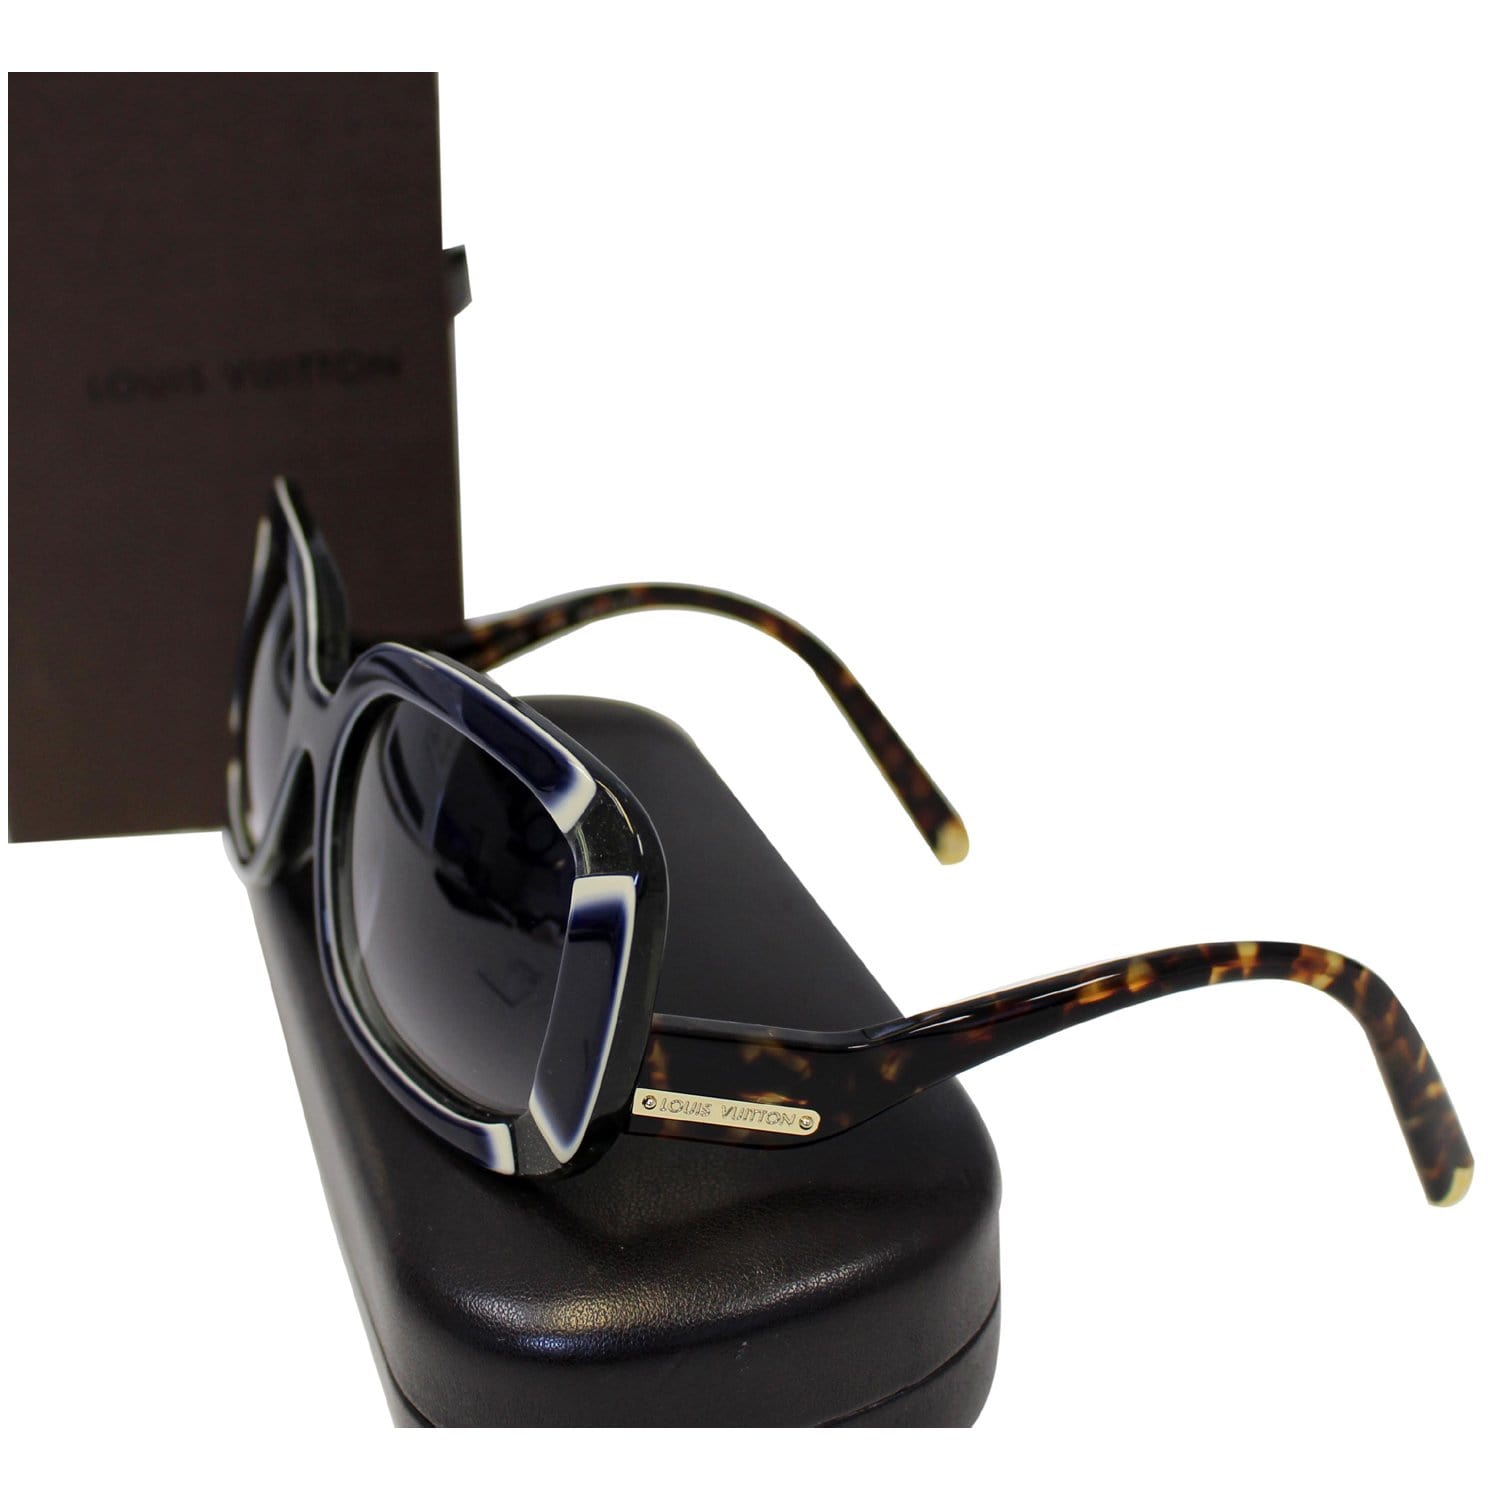 Louis Vuitton Sunglasses - Lampoo